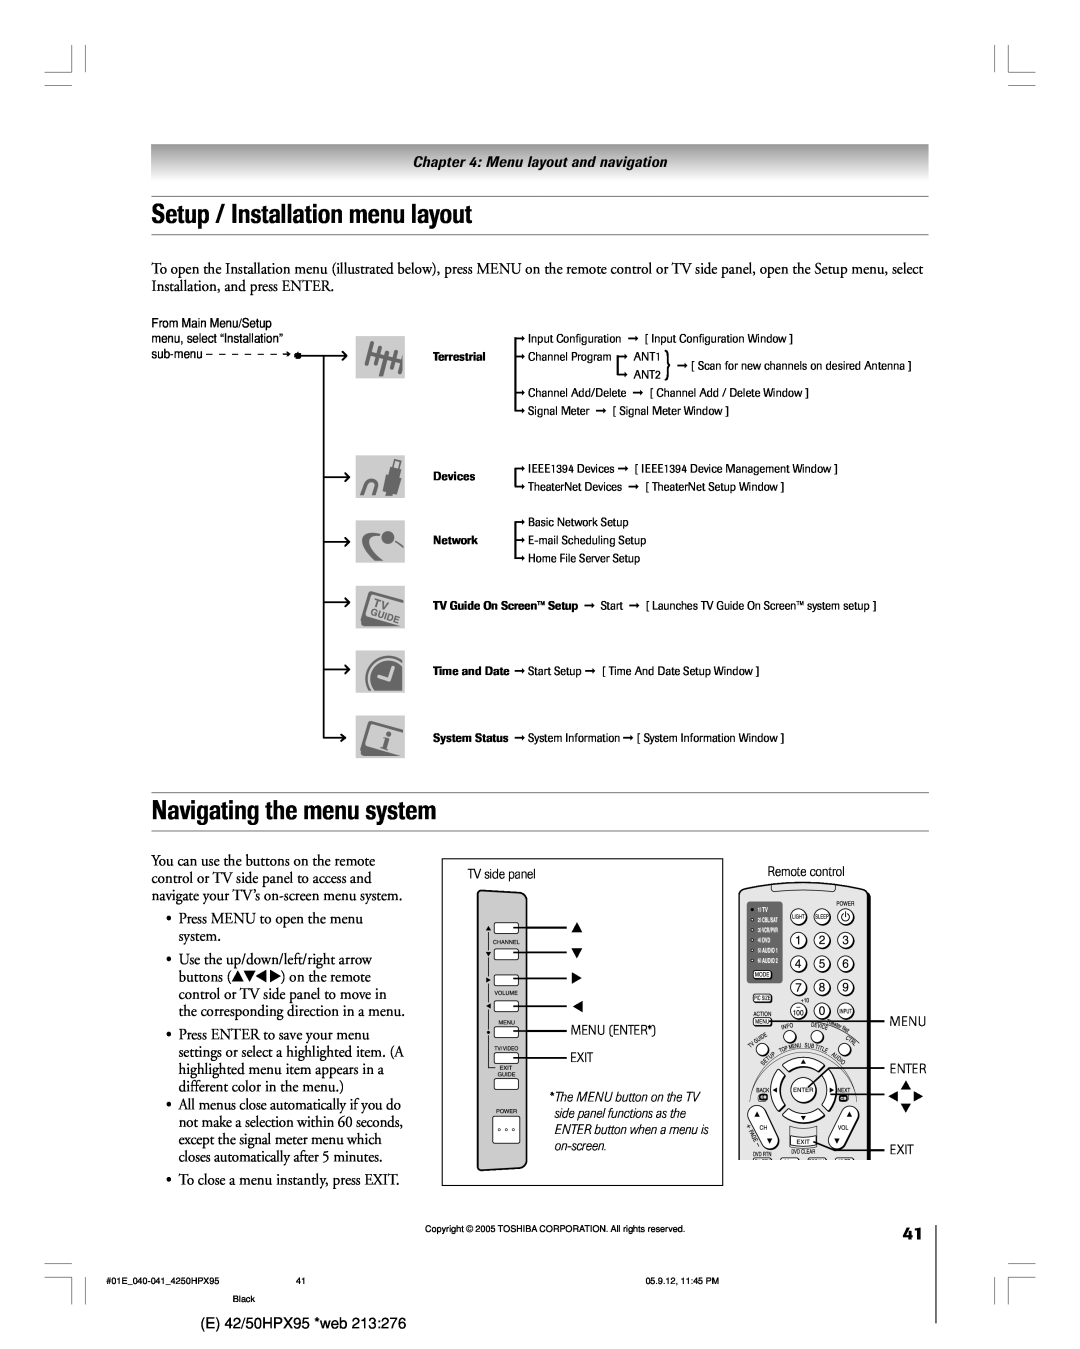 Toshiba 42HPX95 Setup / Installation menu layout, Navigating the menu system, ¥ Press MENU to open the menu system 